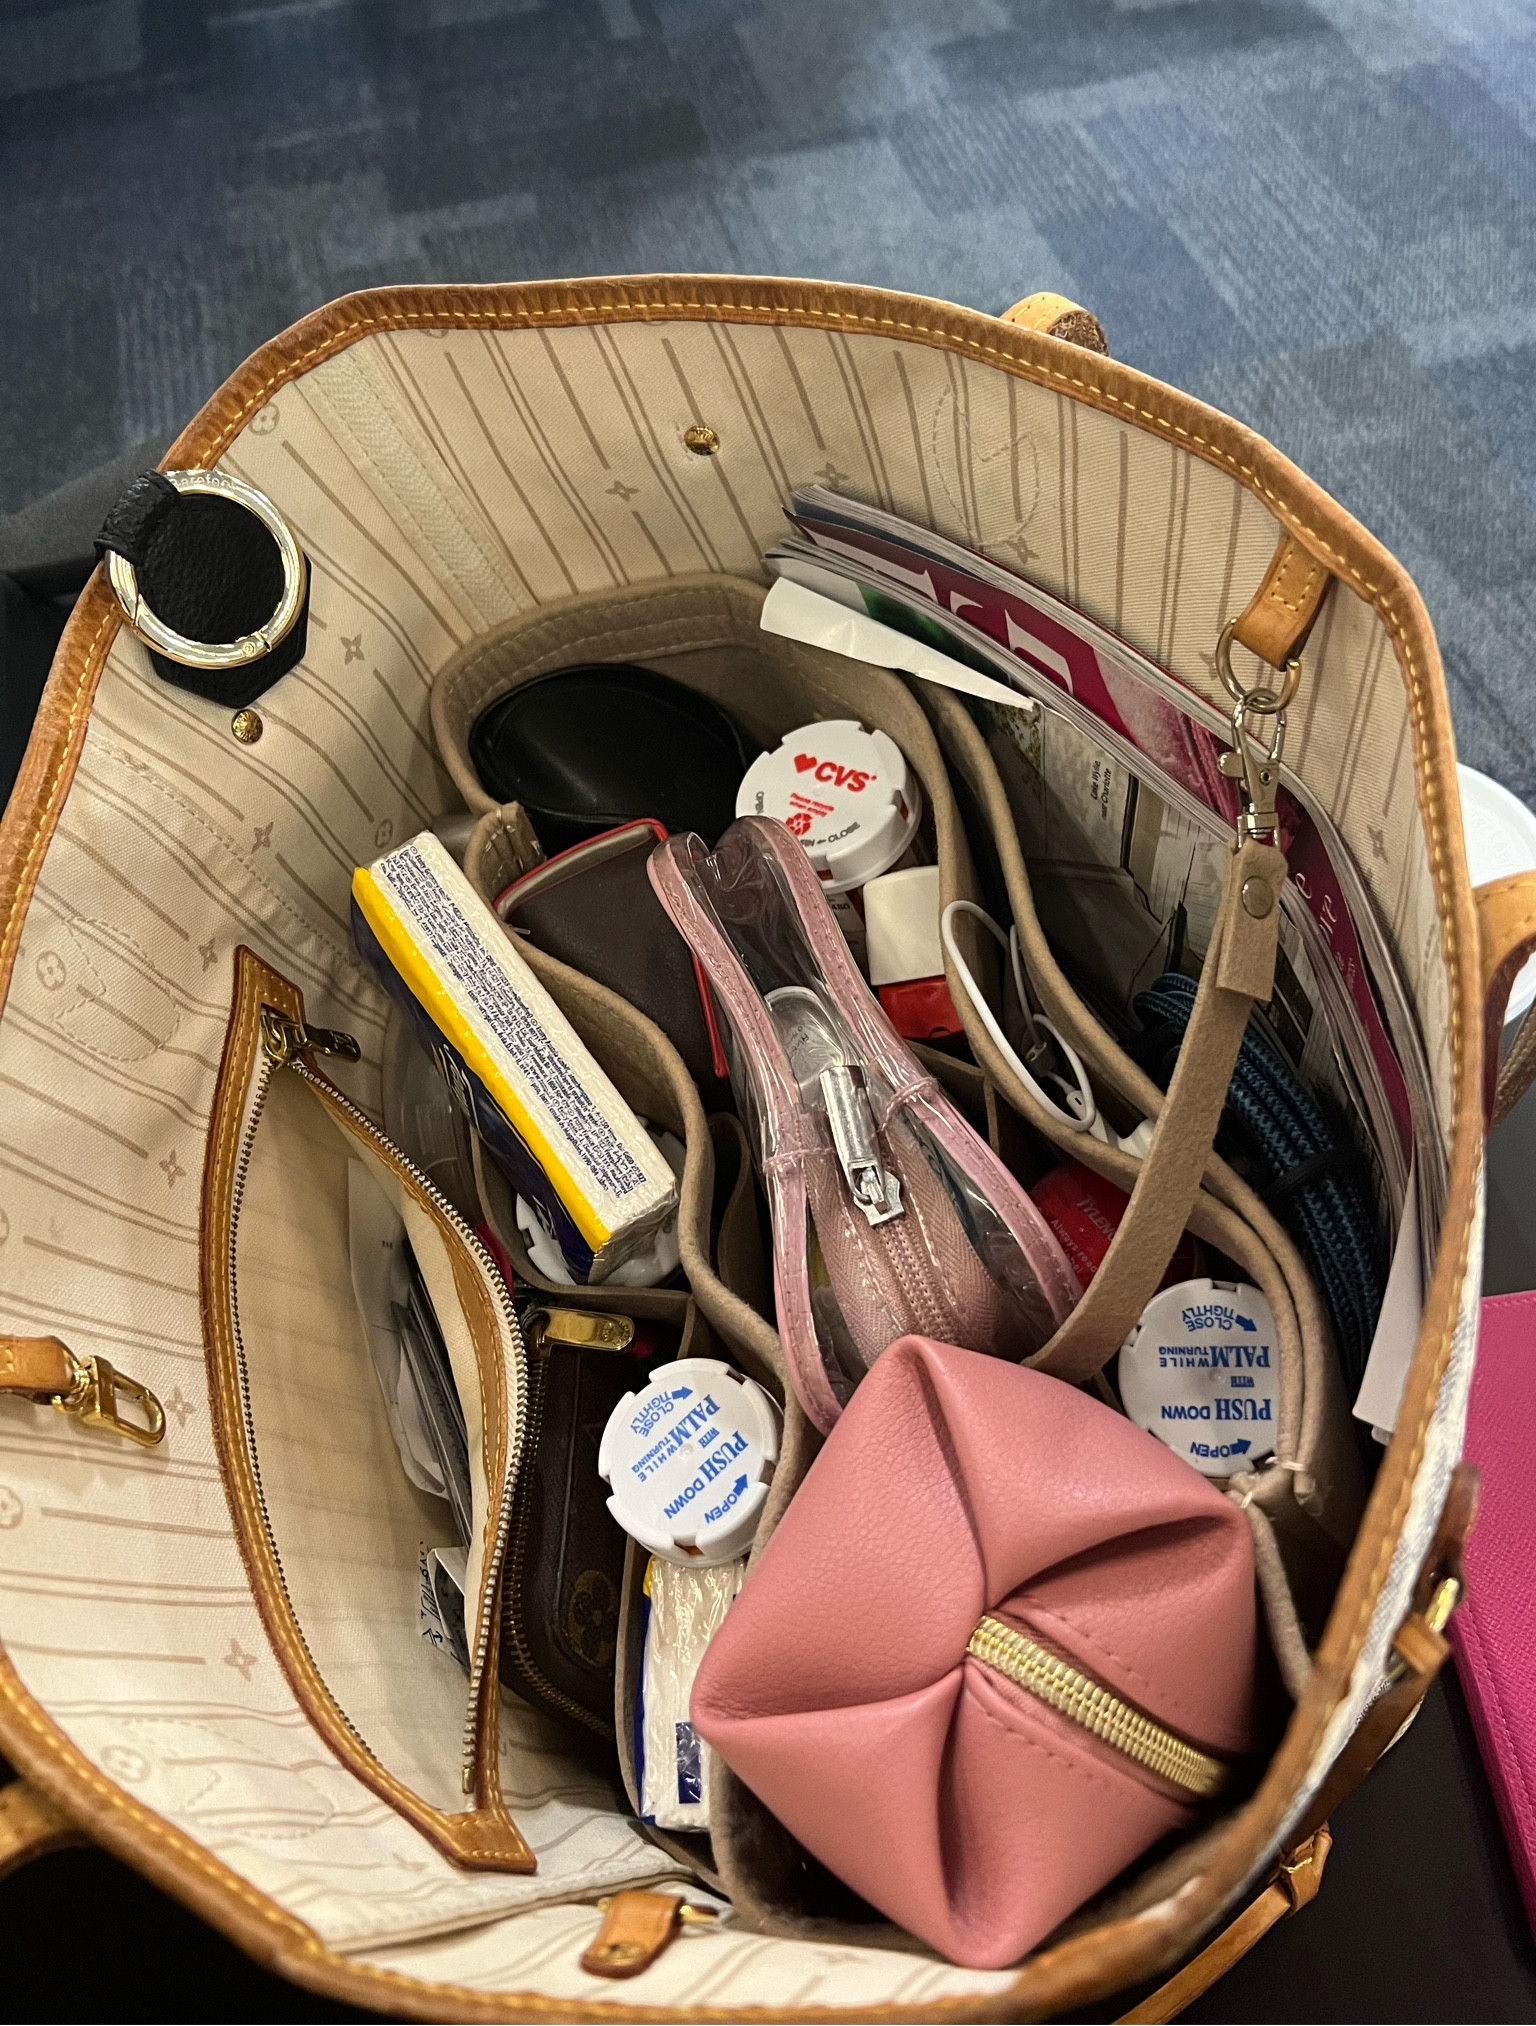  OMYSTYLE Purse Organizer Insert for Handbags, Suede